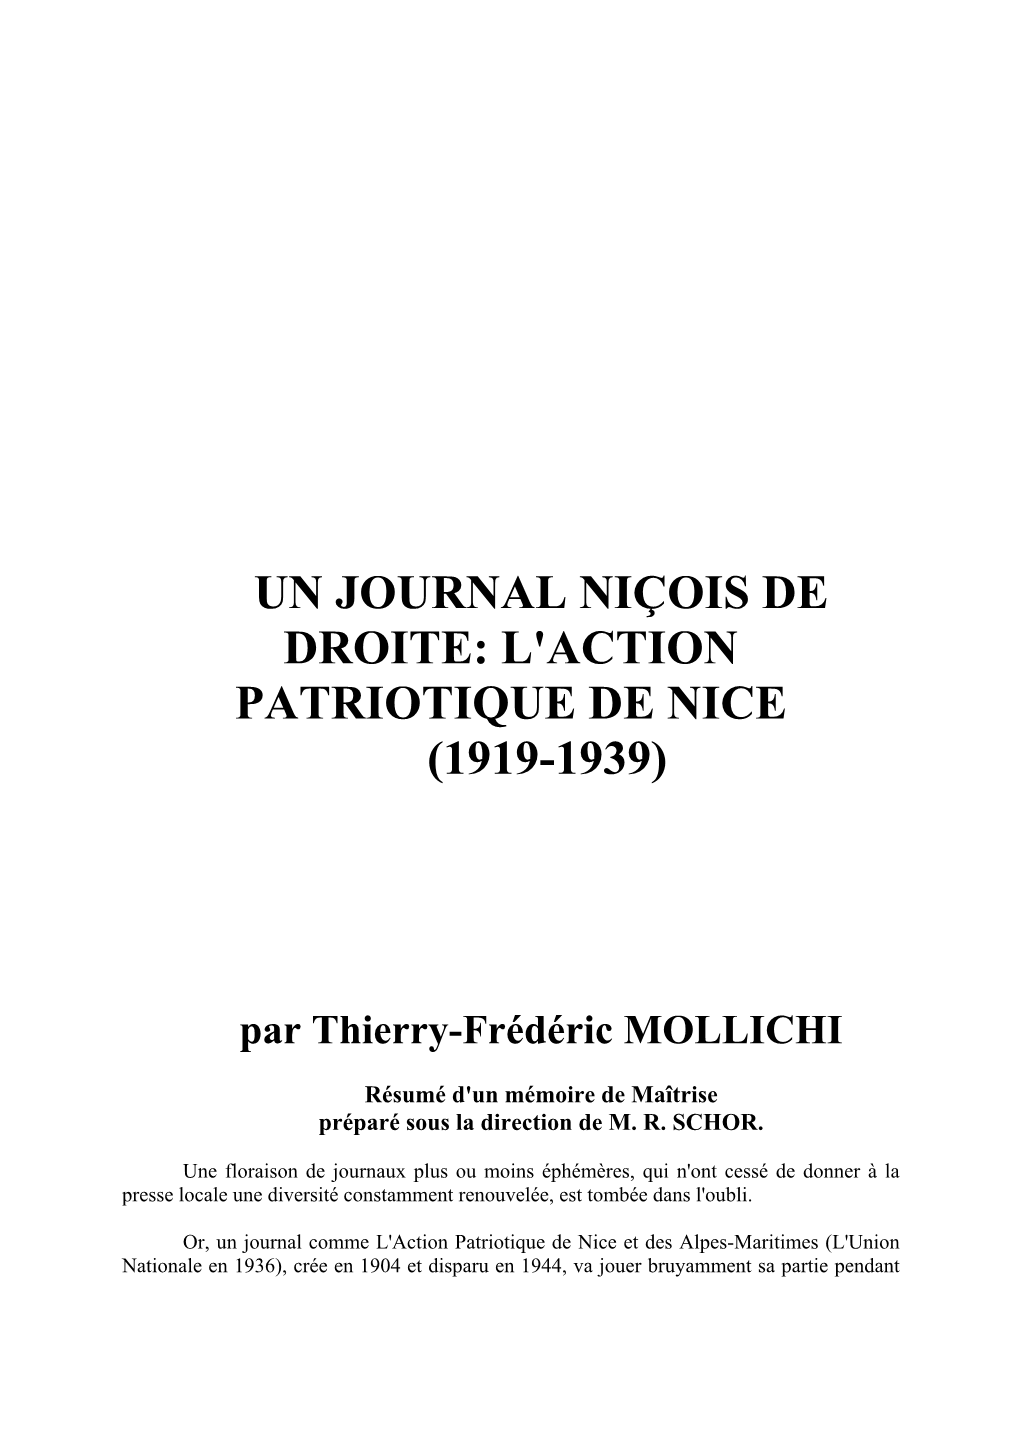 L'action Patriotique De Nice (1919-1939)